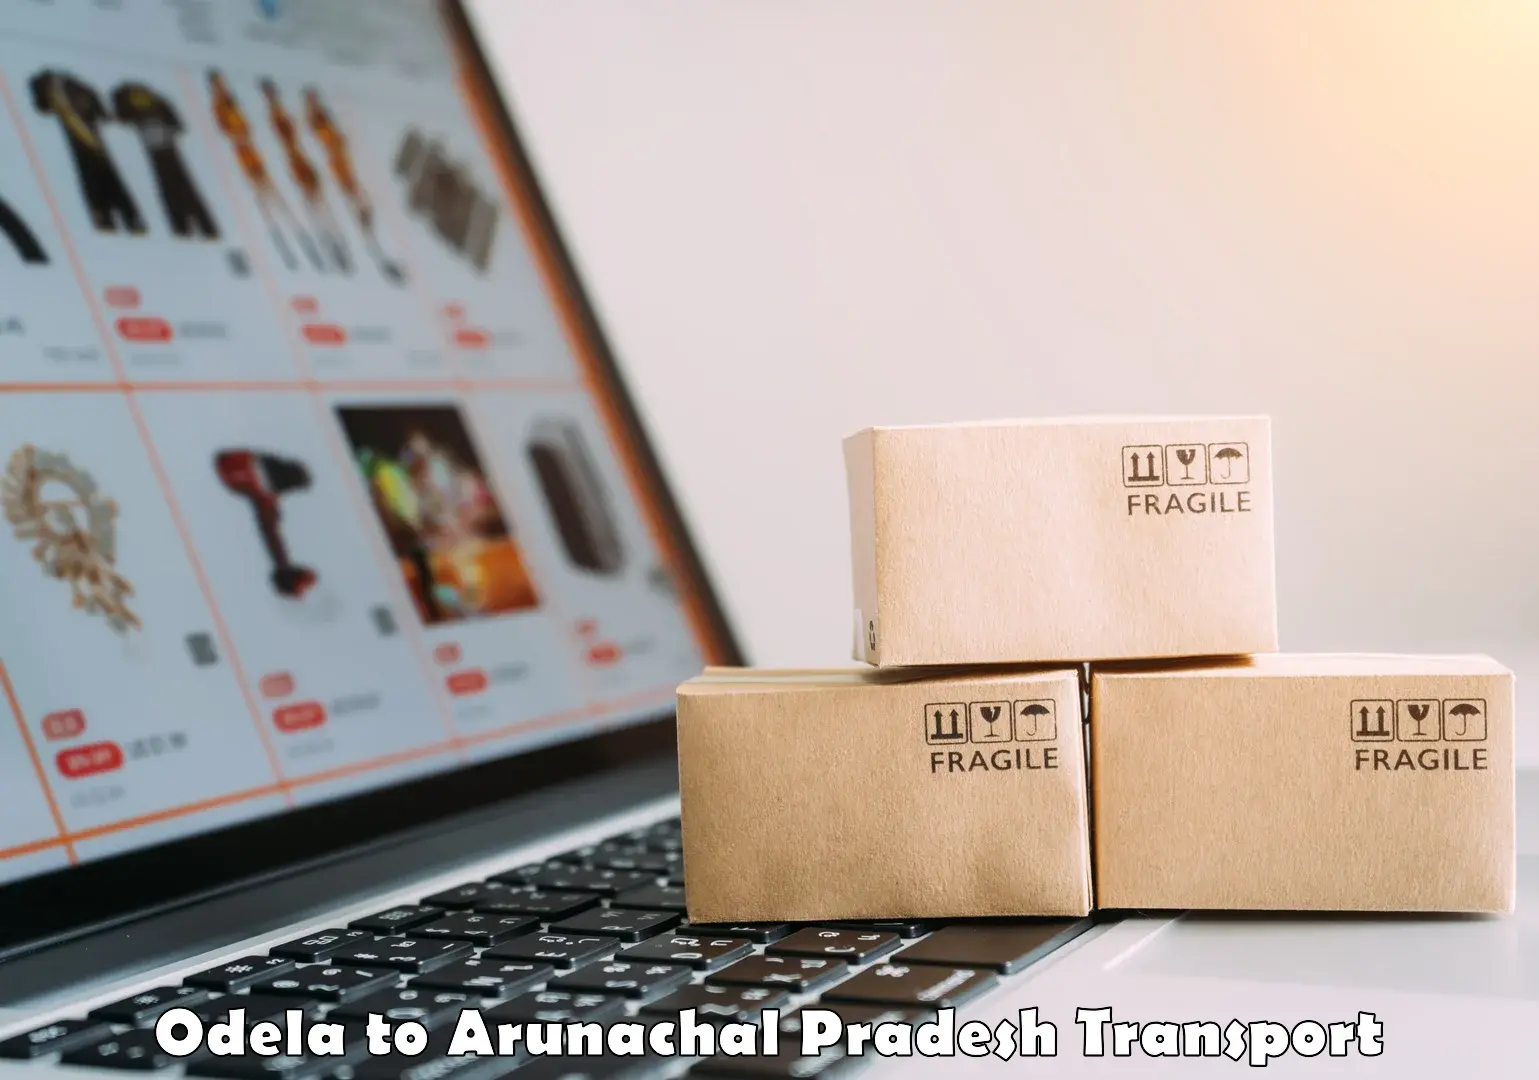 Two wheeler parcel service Odela to Aalo